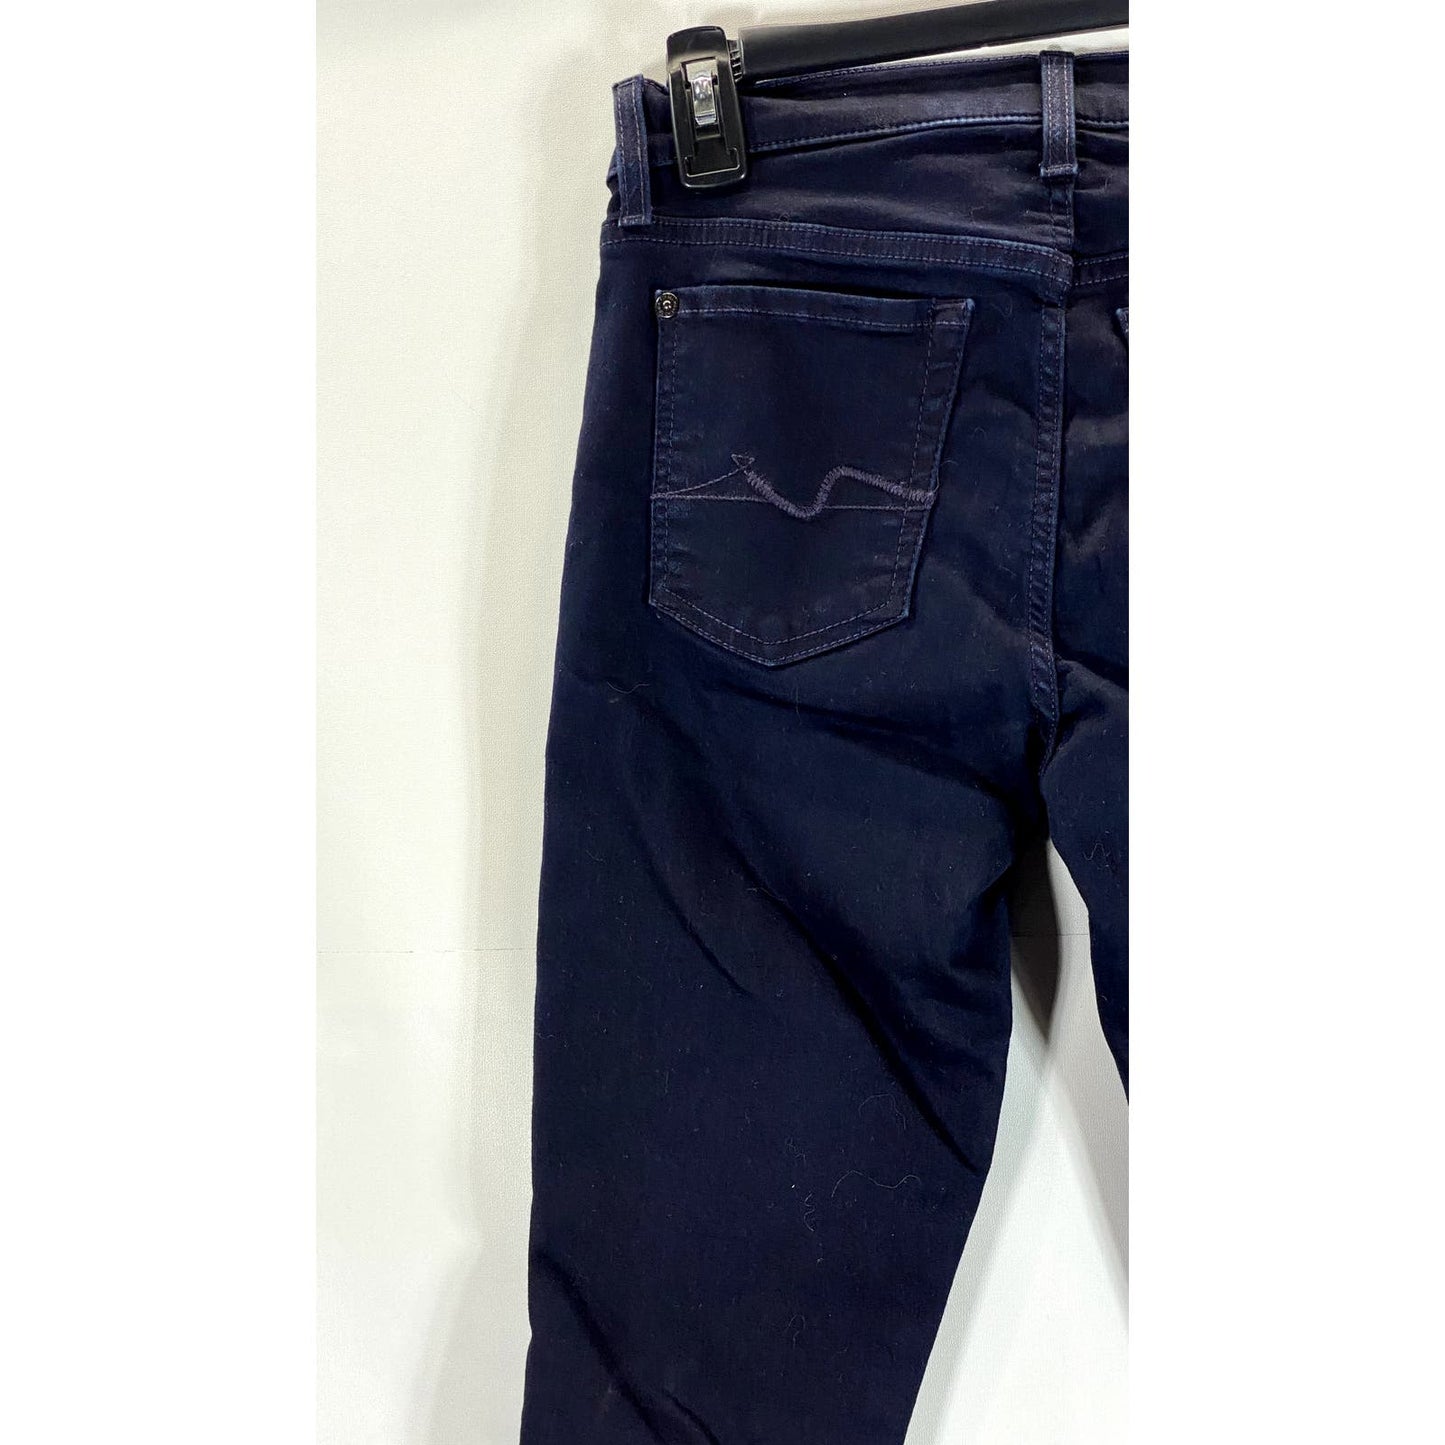 7 FOR ALL MANKIND Women's Dark Navy Skinny Five Pocket Ankle Jeans SZ 25